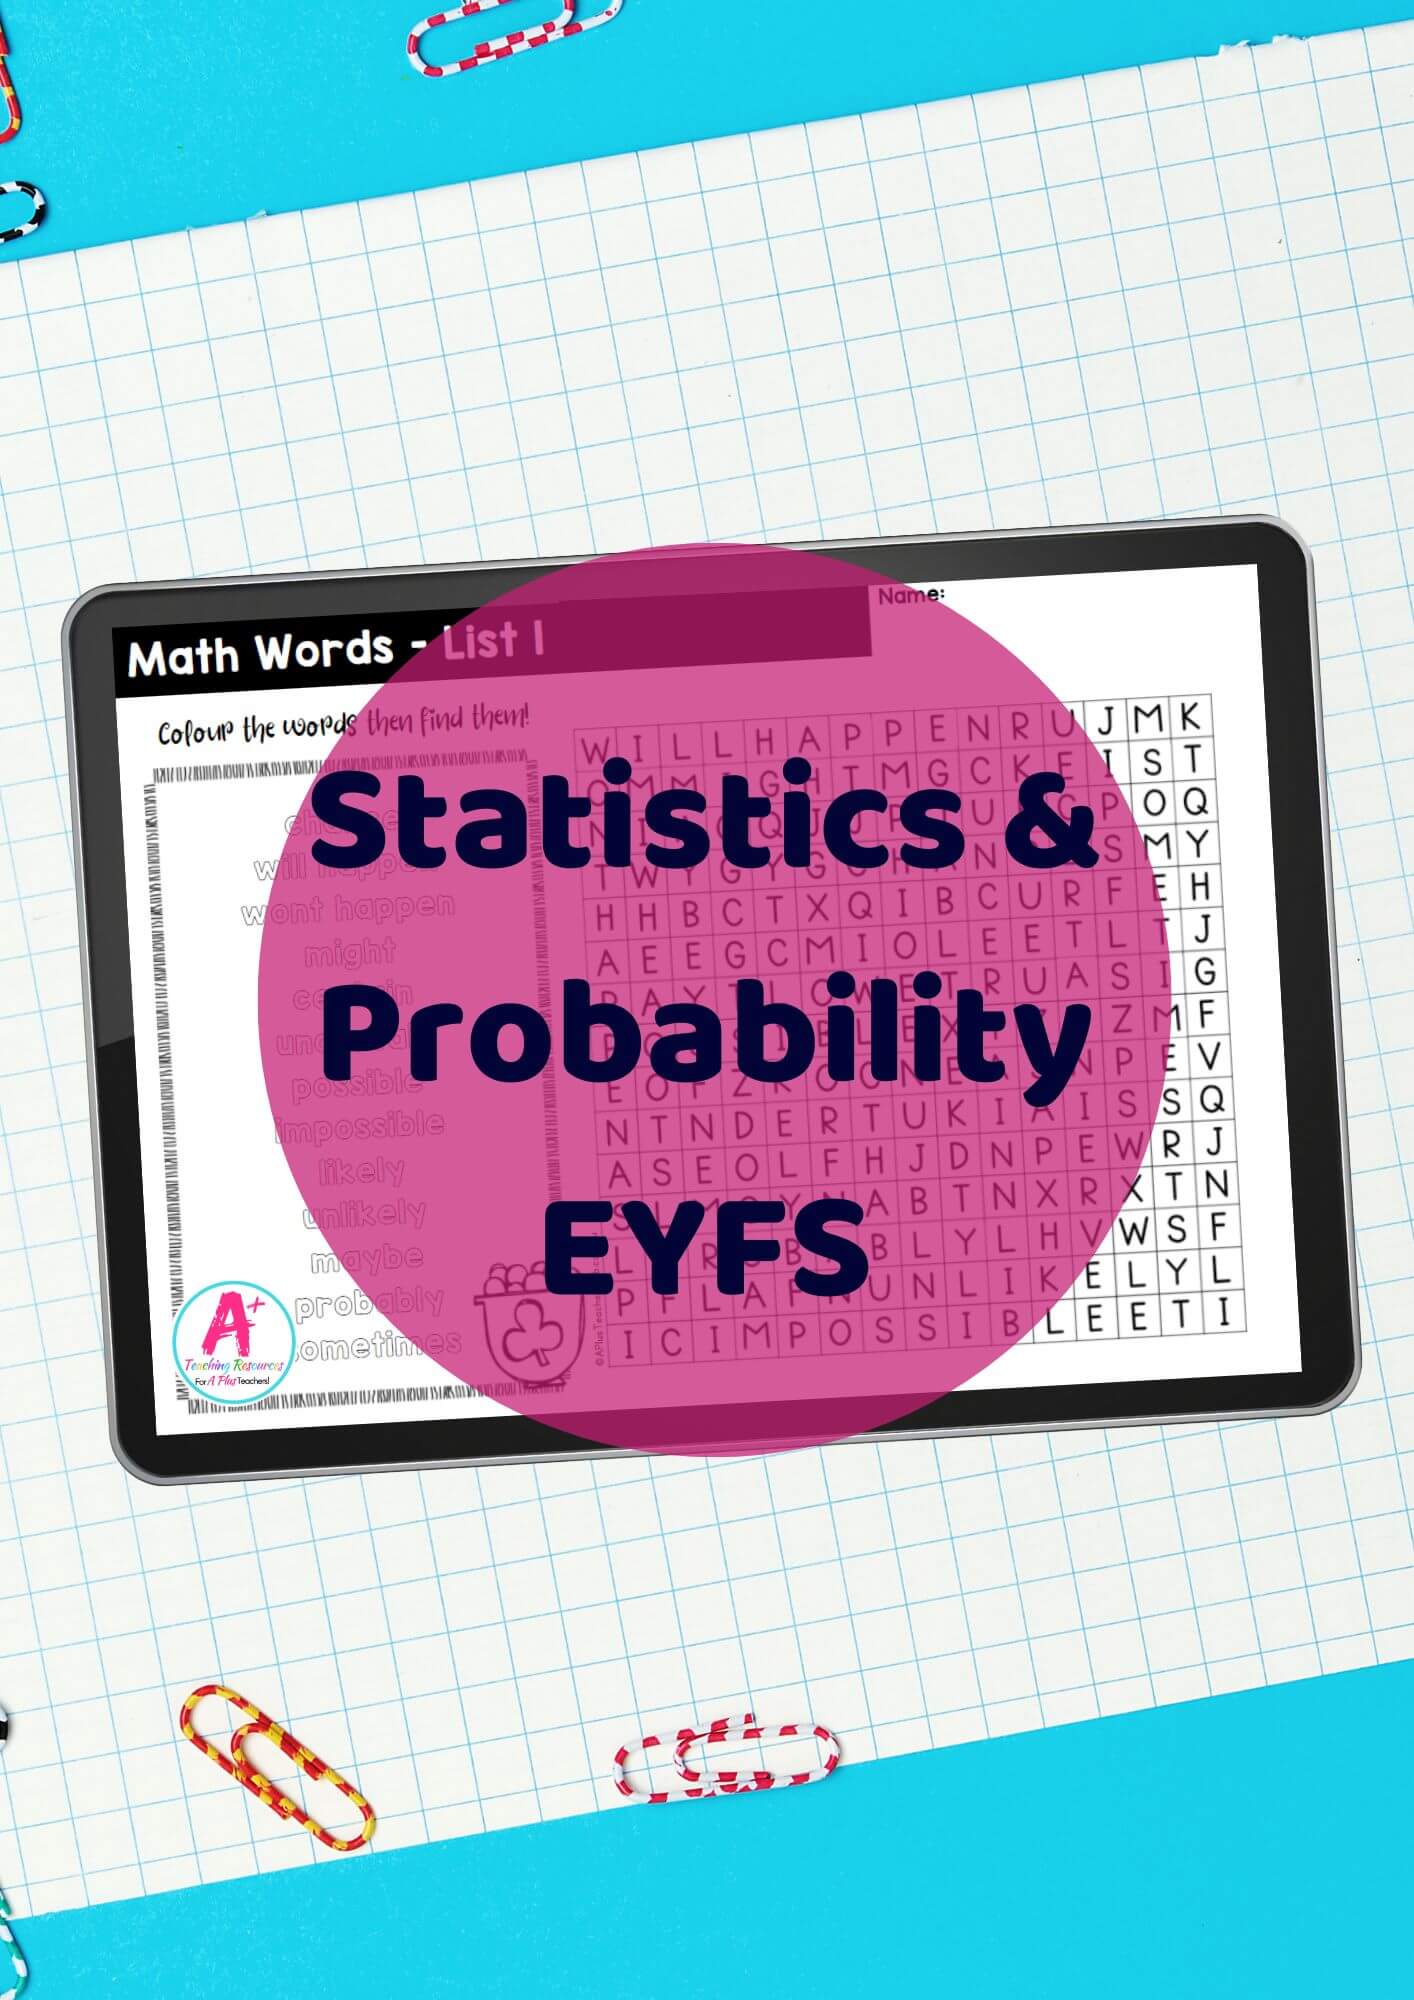 Statistics & Probability POWERPOINT - EYFS